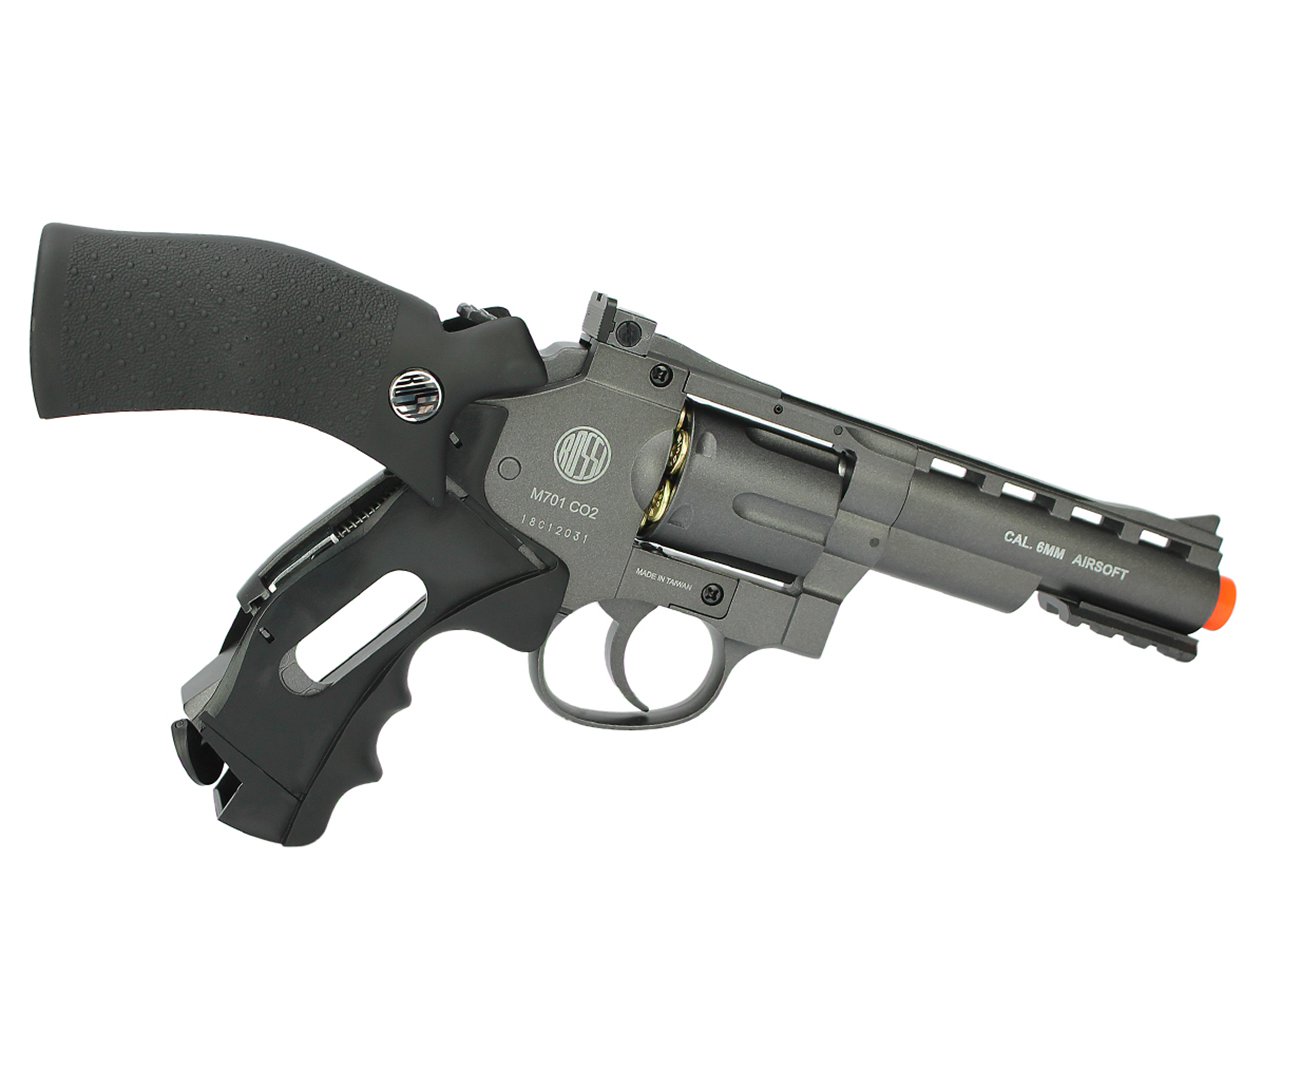 Revolver 38 Airsoft Gas Co2 6 Tiros 4" Oxidado Rossi Full Metal M701 6.0mm - Wingun